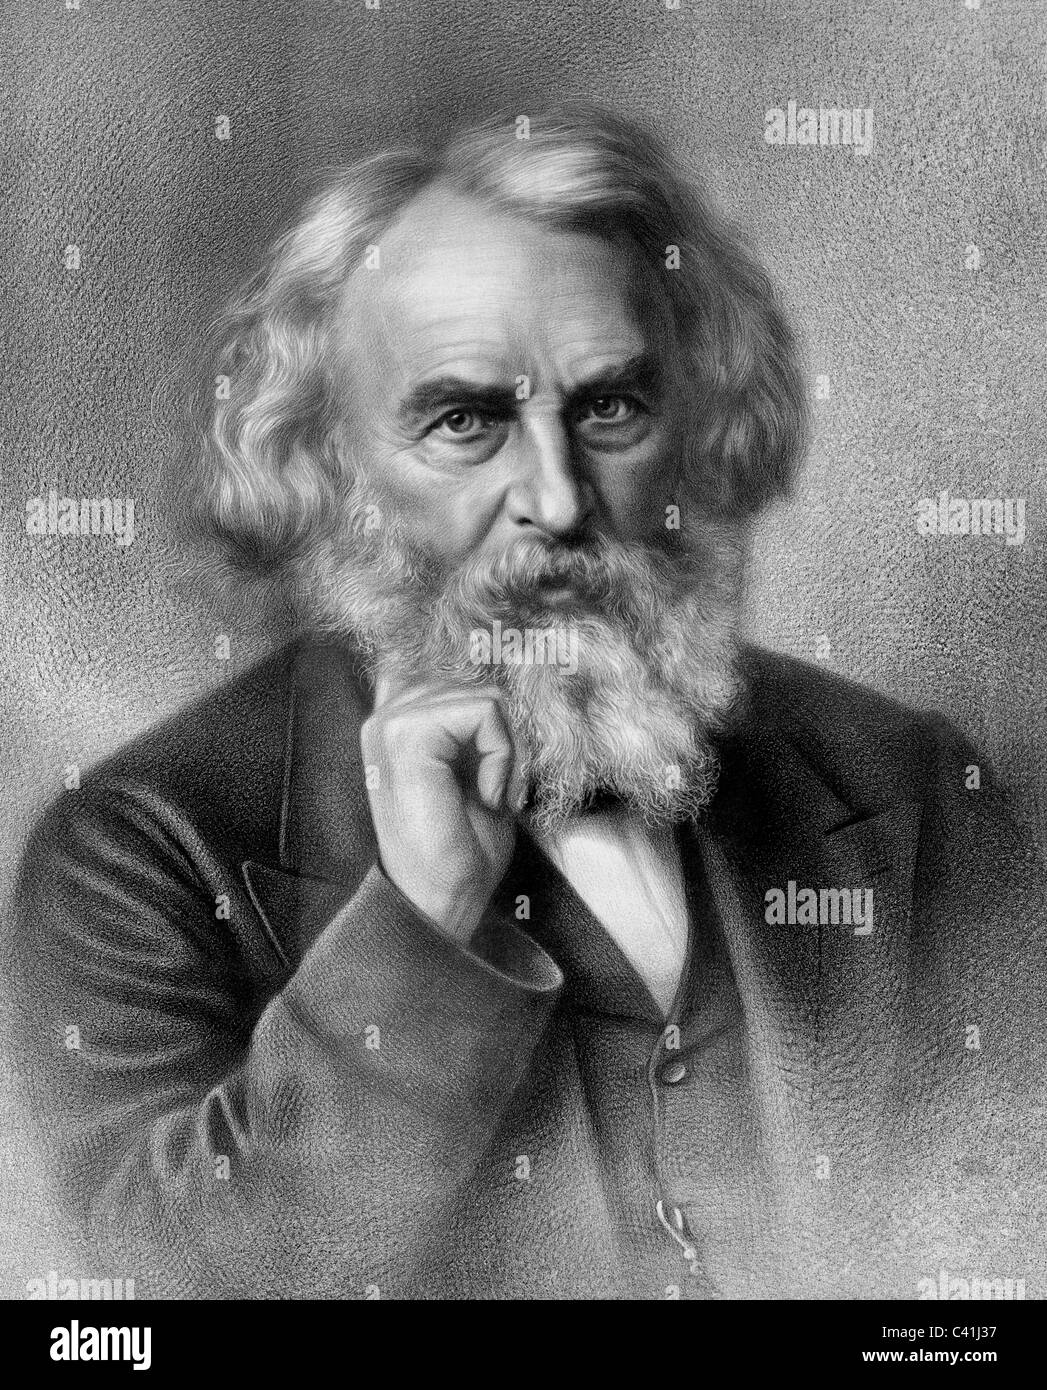 Henry Wadsworth Longfellow - poeta americano ed educatore - circa 1880 Foto Stock